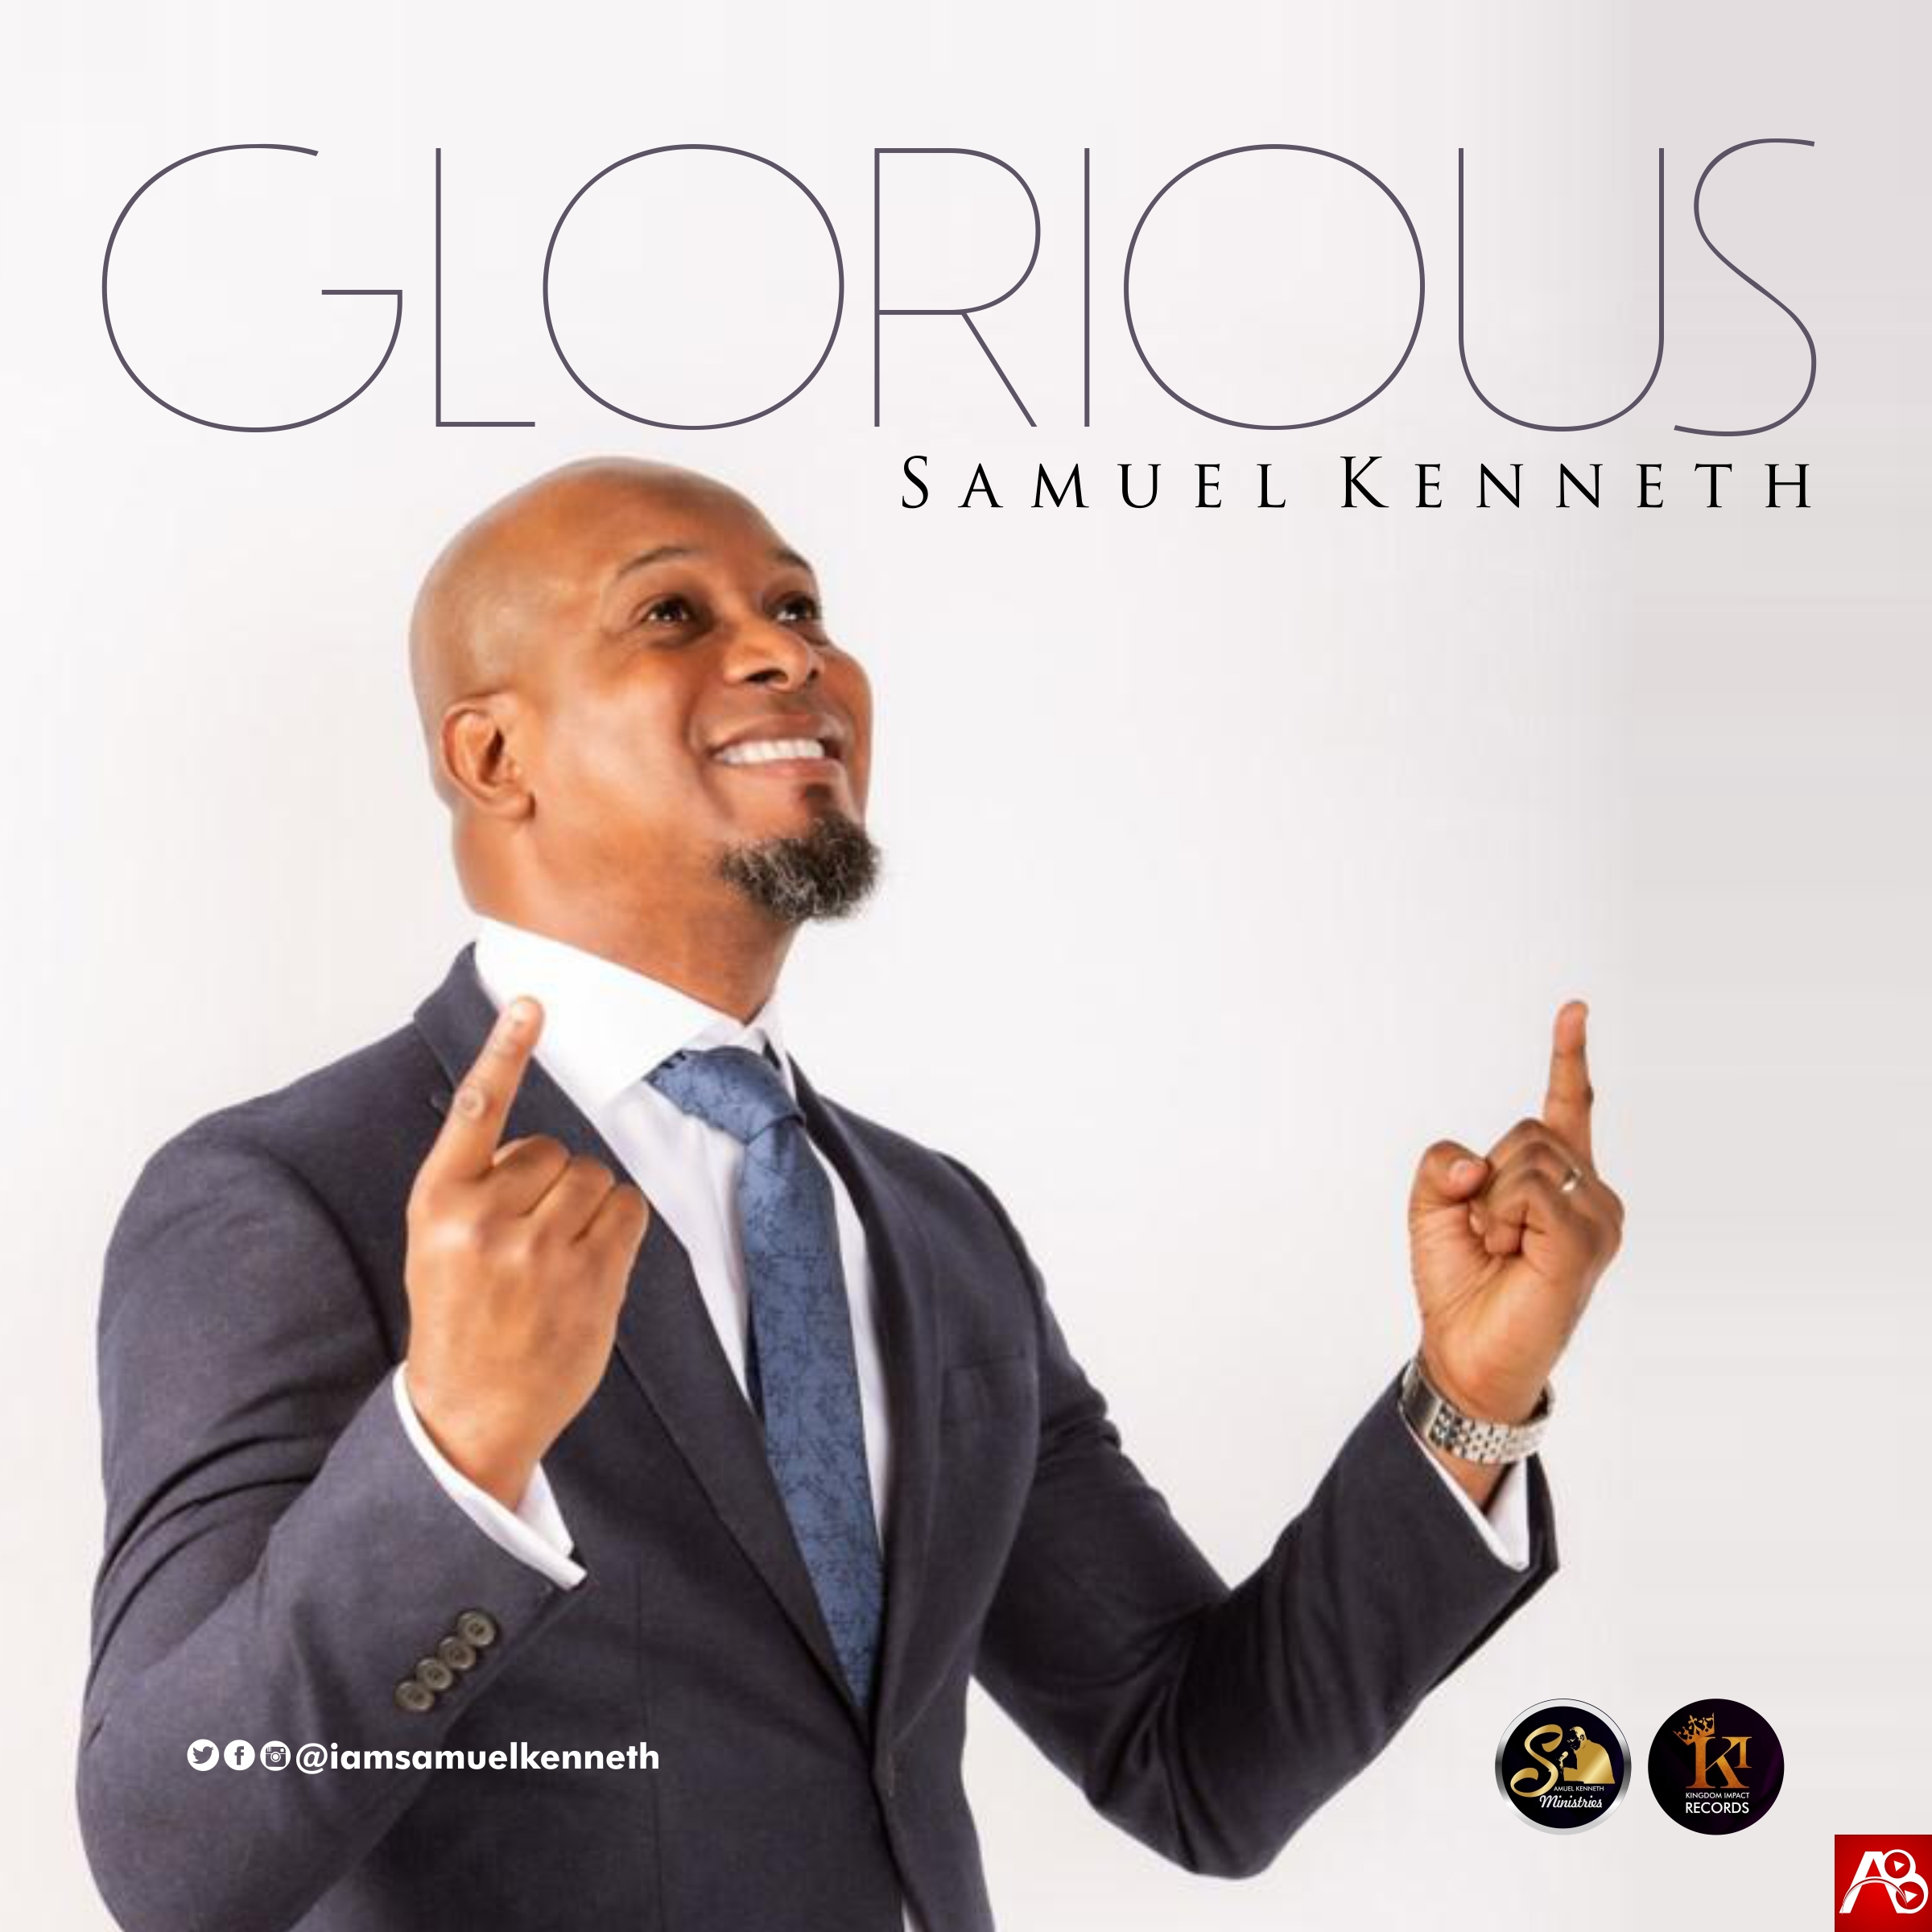 Glori Samuel Kenneth Glorious us - Samuel Kenneth